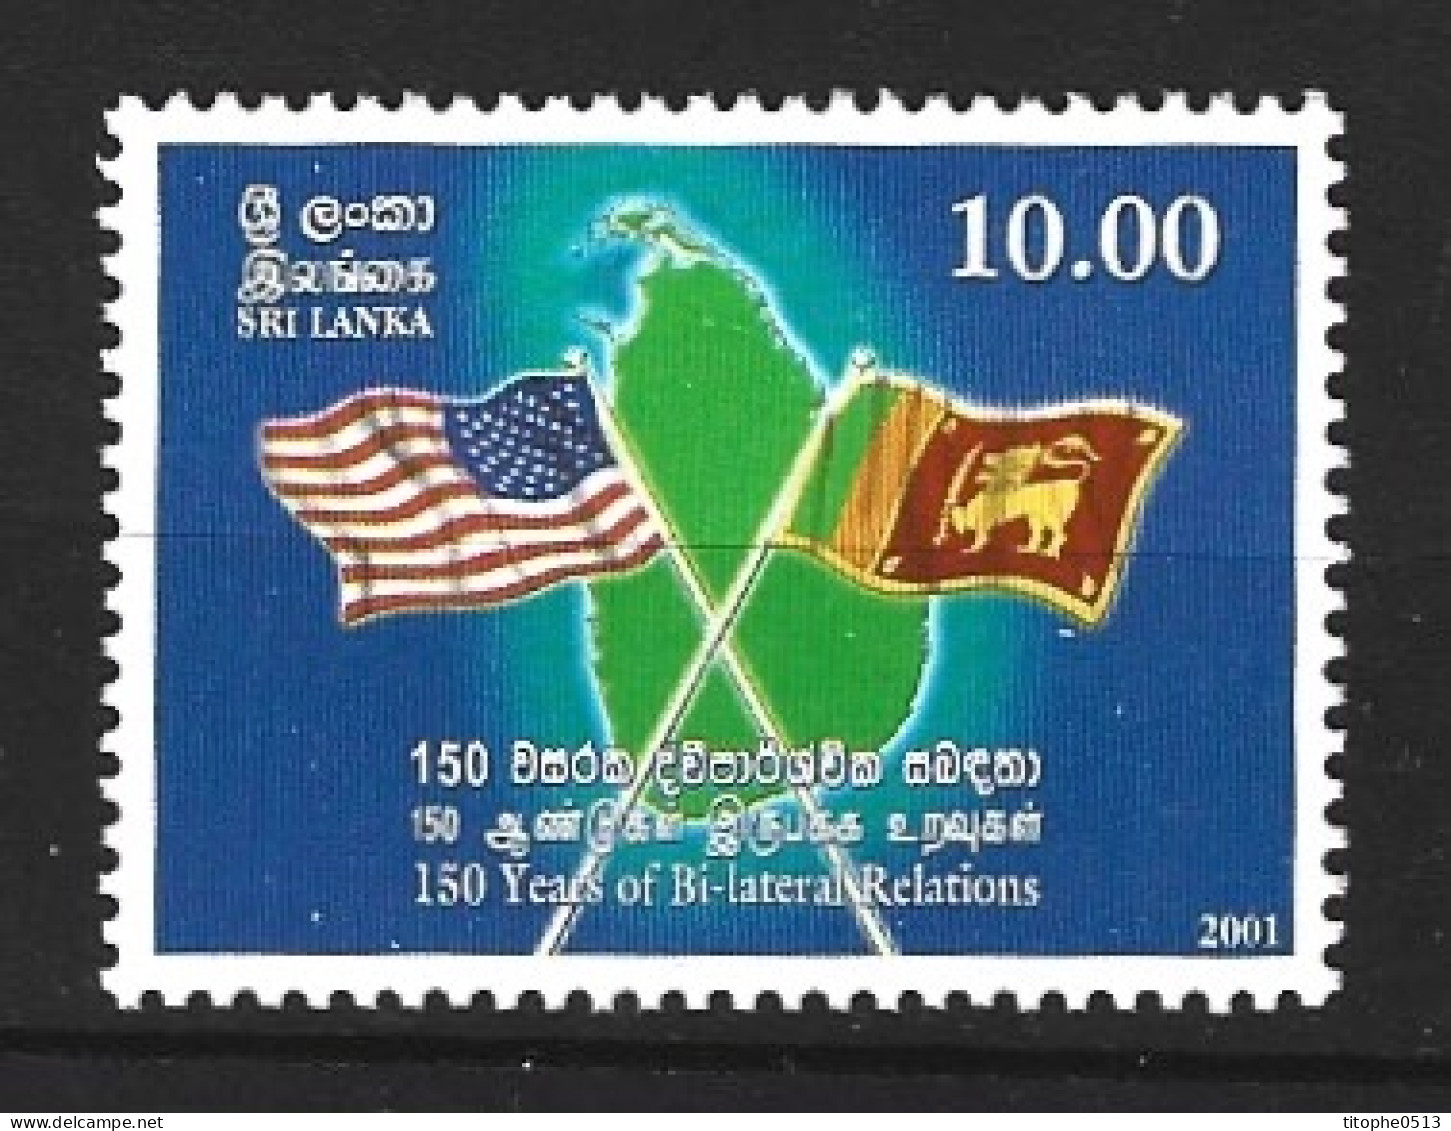 SRI LANKA. N°1268 De 2001. Drapeaux. - Briefmarken